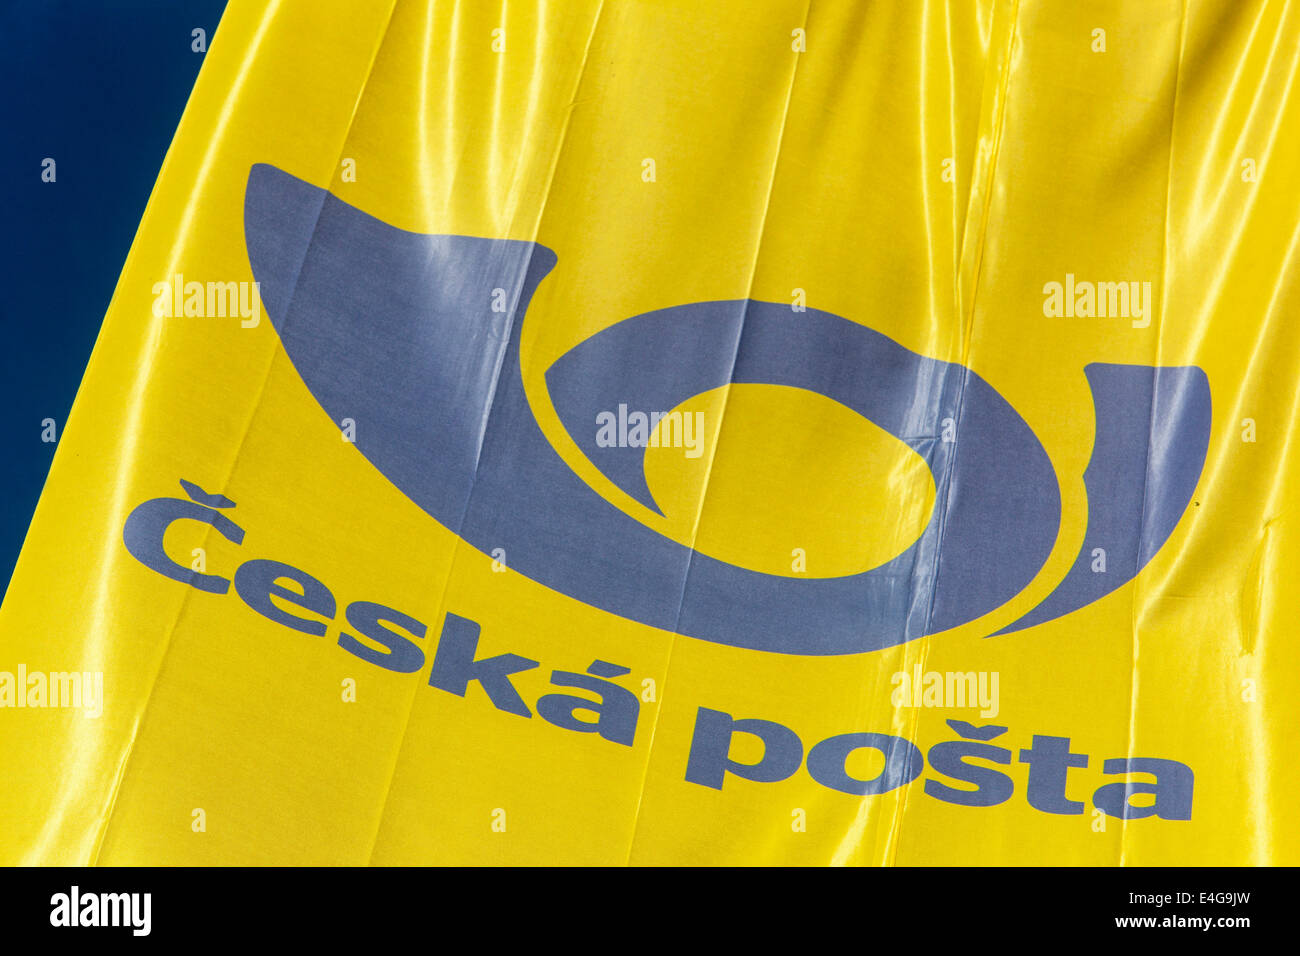 Ceska posta, Czech Post logo Stock Photo